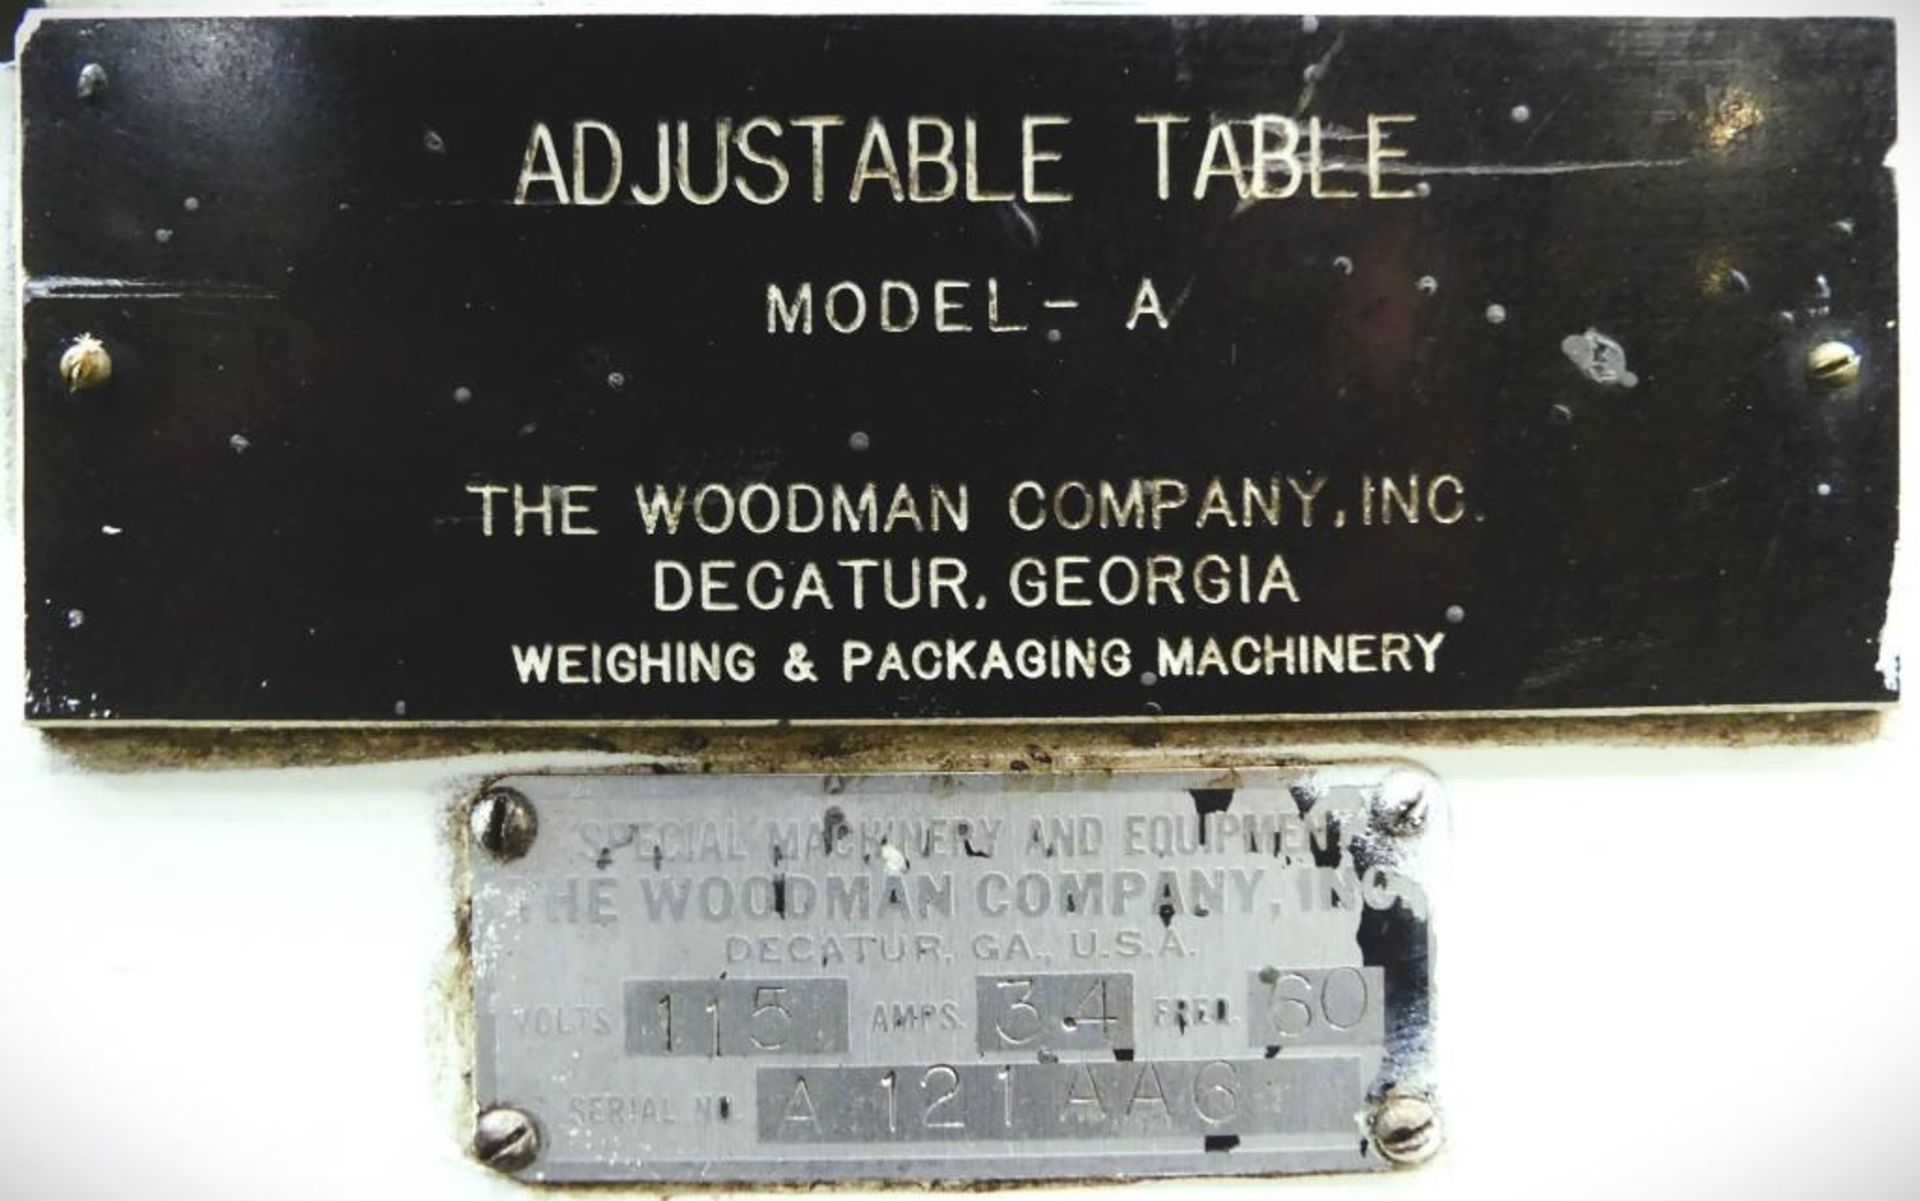 Woodman Company Model-A Adjustable Table - Image 11 of 11